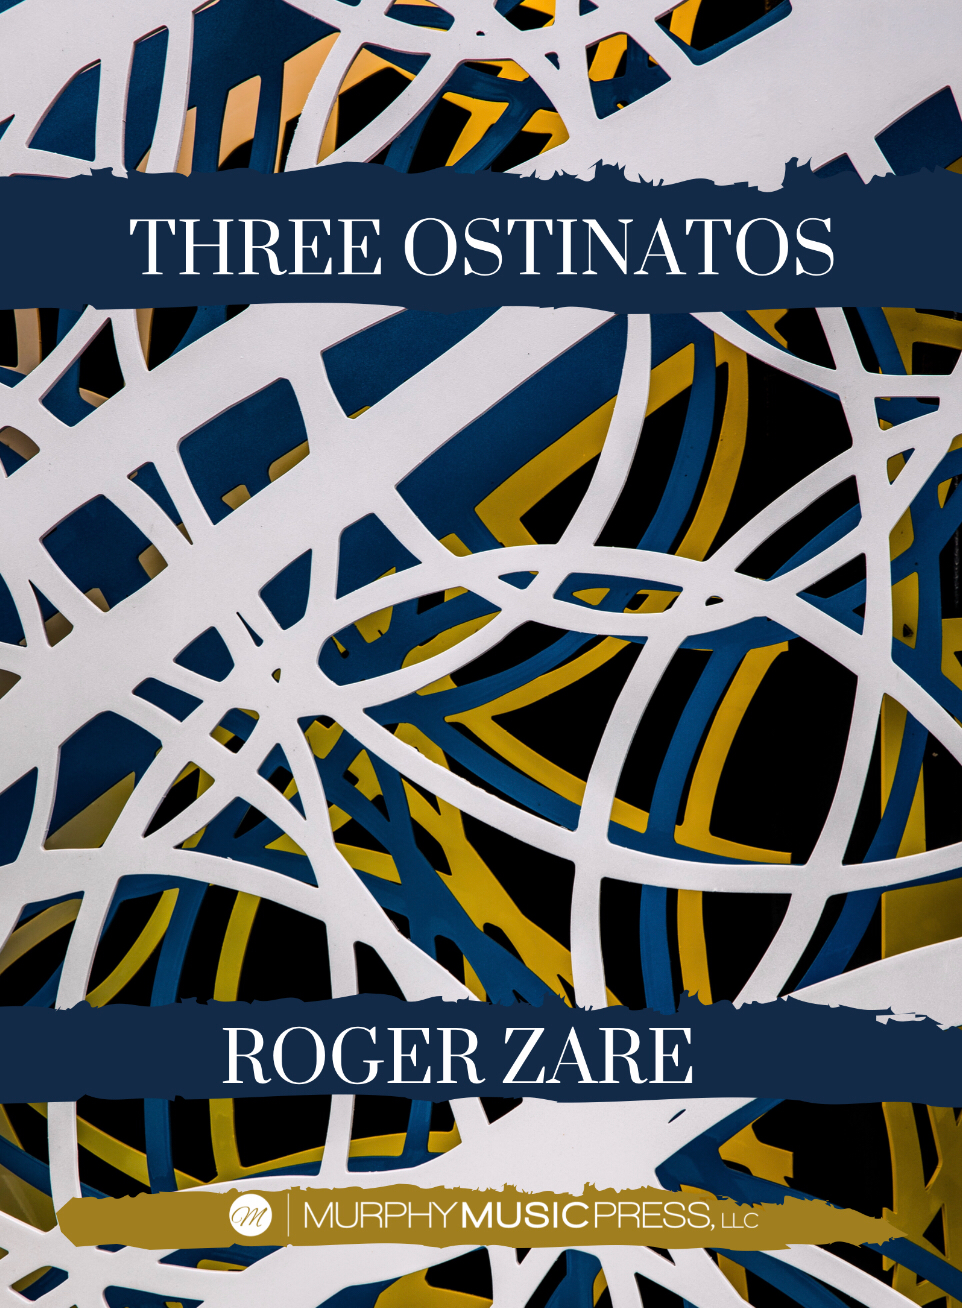 Three Ostinatos  by Roger Zare